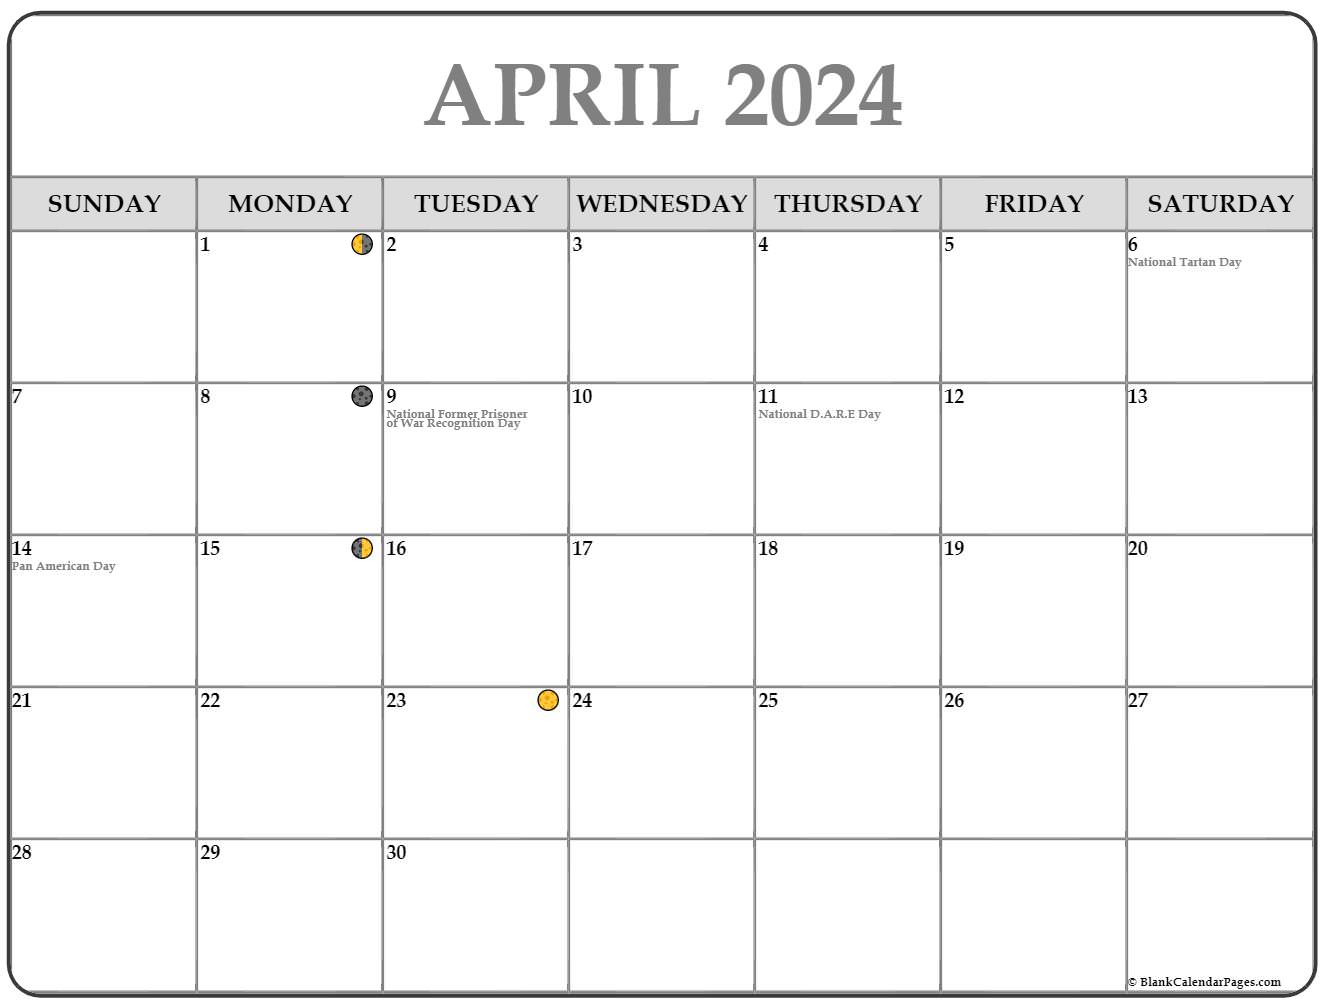 April 2024 Lunar Calendar | Moon Phase Calendar regarding April 2024 Moon Calendar